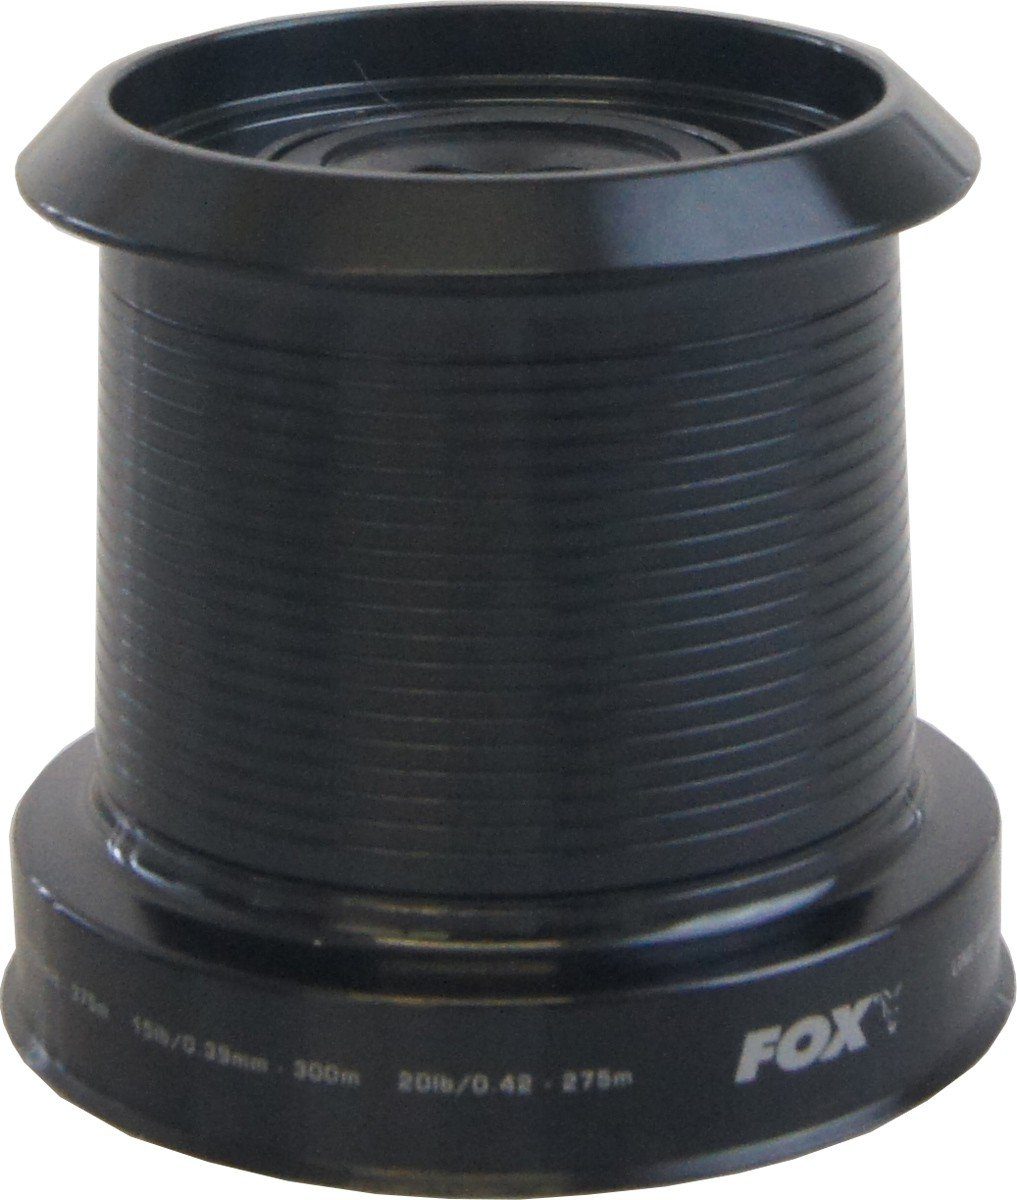 FOX Spare - 12000 International Spool Ersatzspule) standard Multirolle Eos